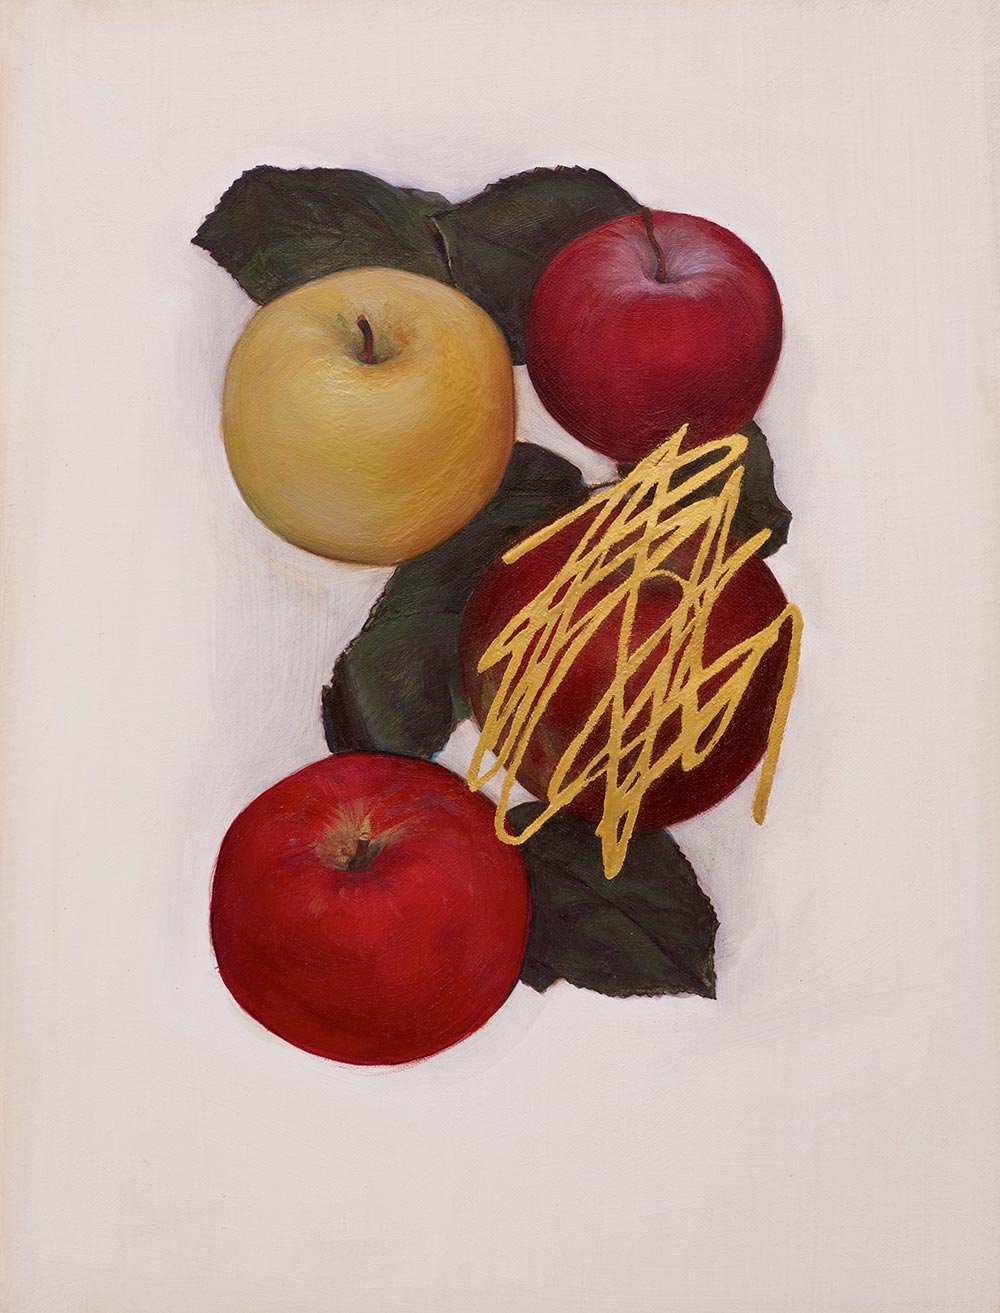 © Jen Mazza, Untitled (4 Apples, Gold), 2014